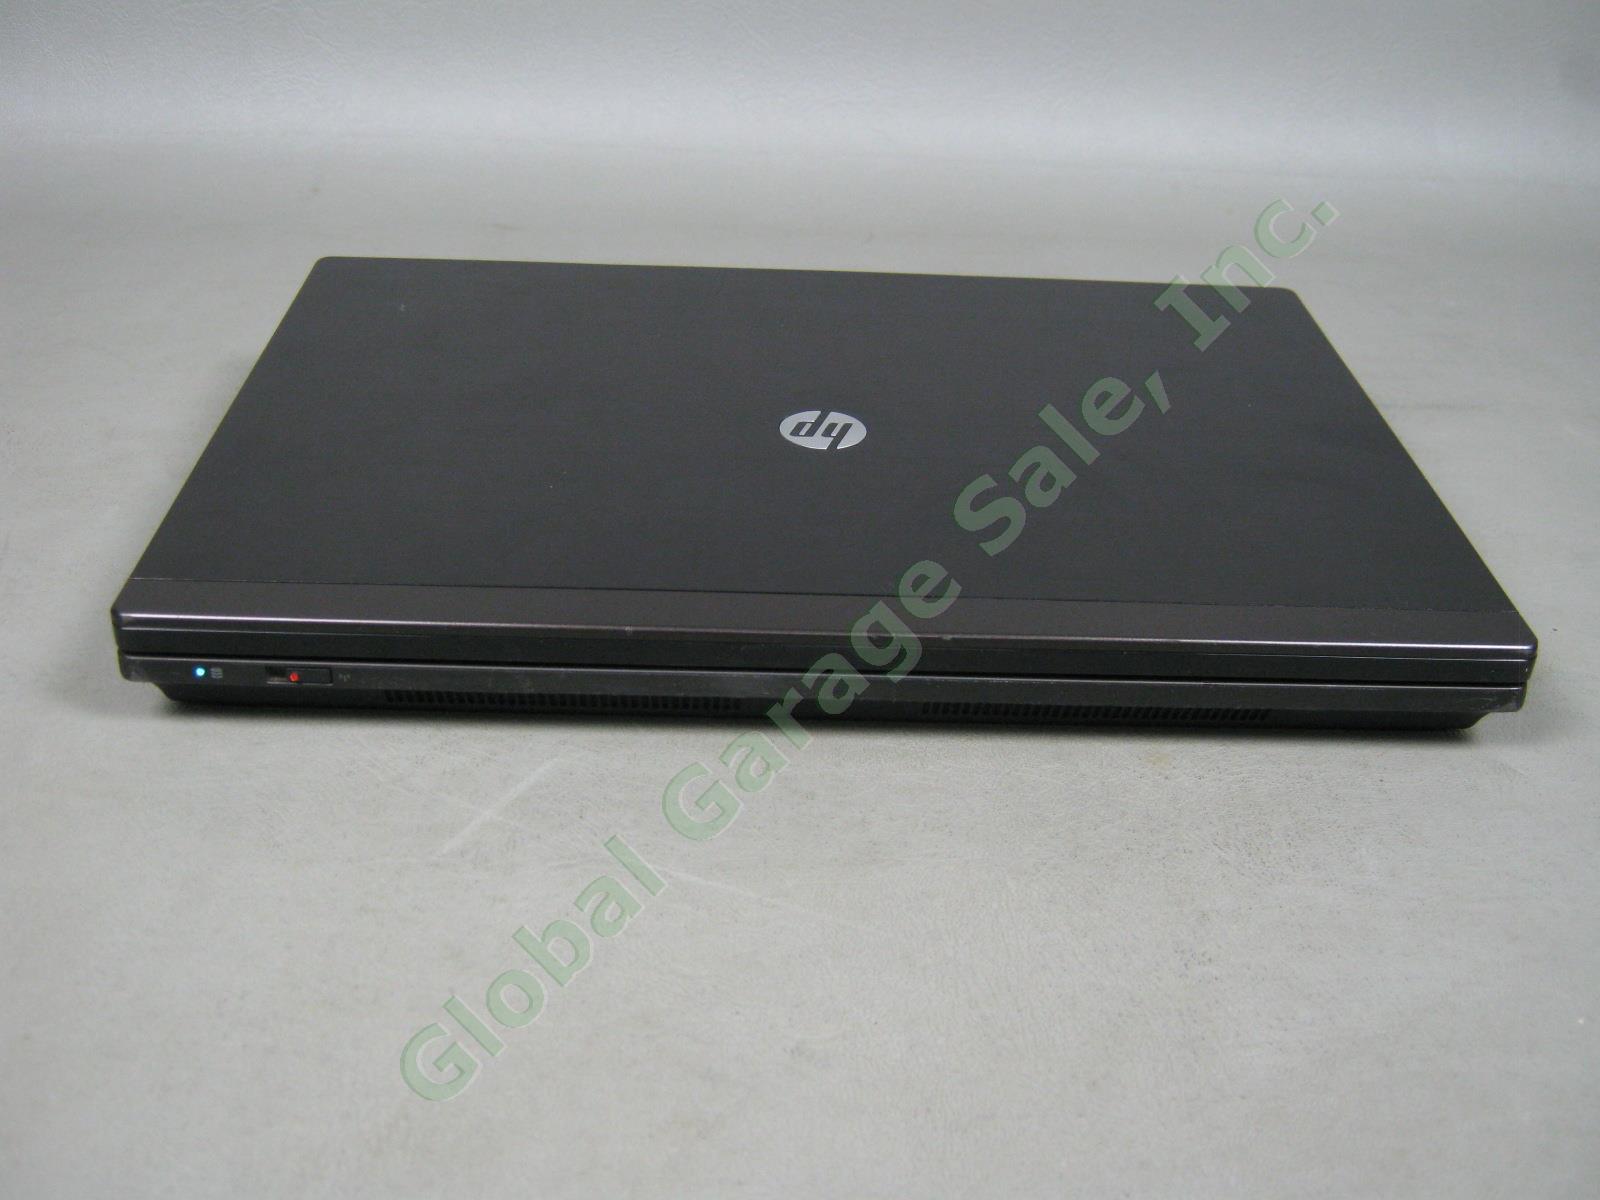 HP Mini 5103 10.1" Netbook Laptop Intel Atom 1.83GHz 2GB RAM 160GB HDD Windows 7 3